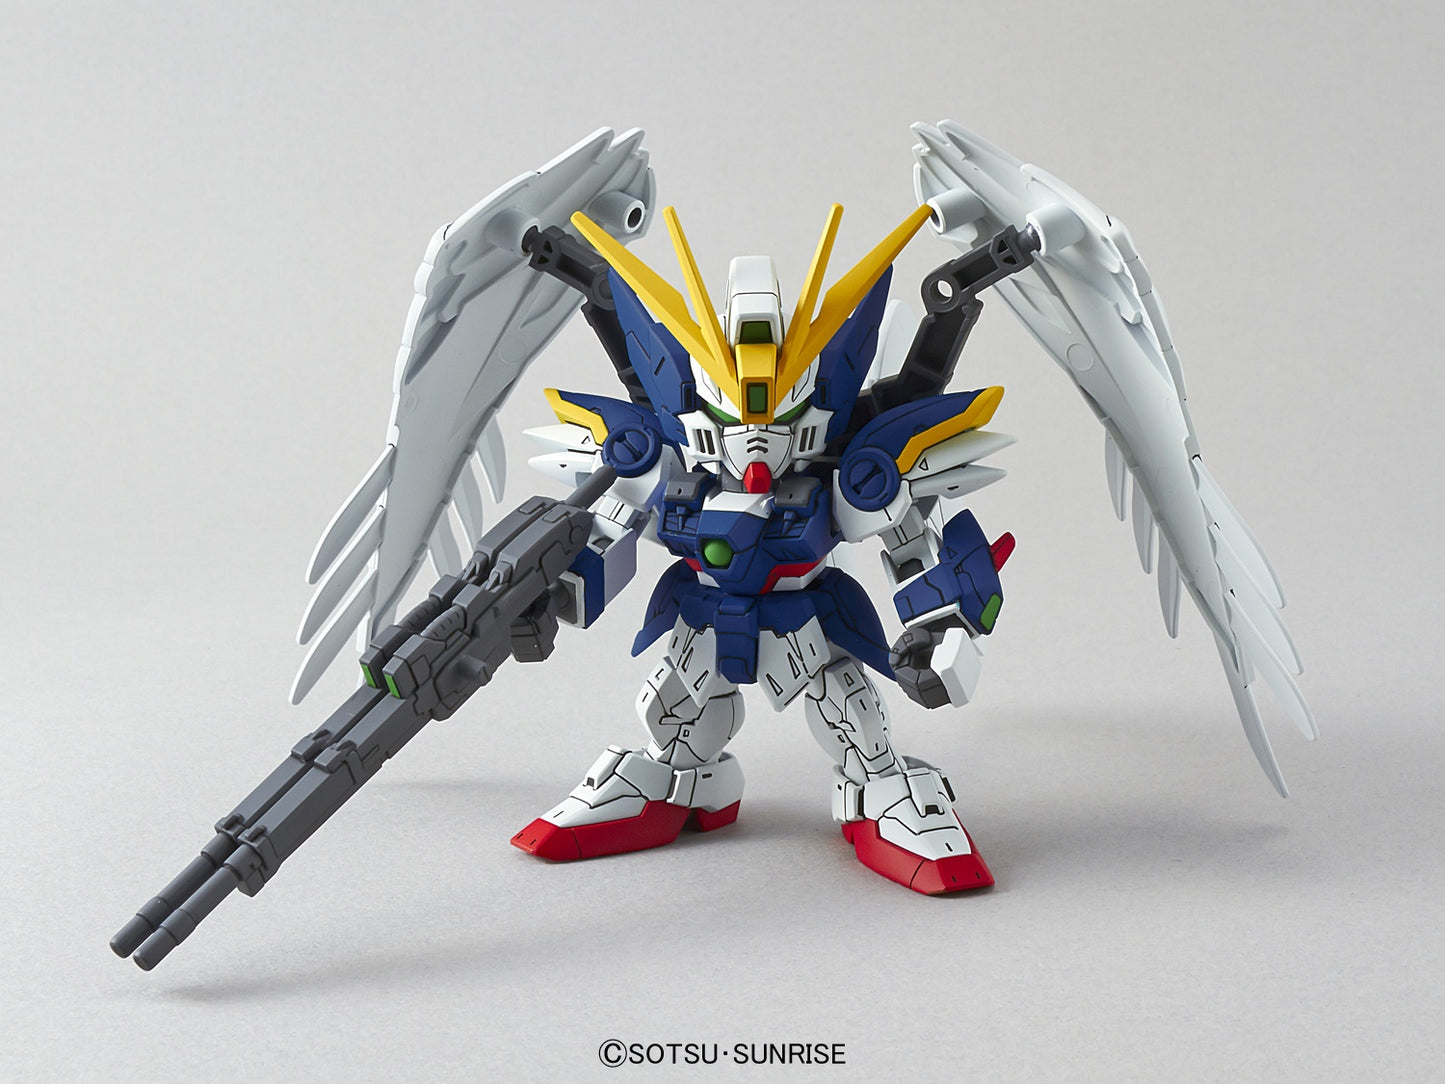 SD Gundam EX aile standard Gundam Zero EW